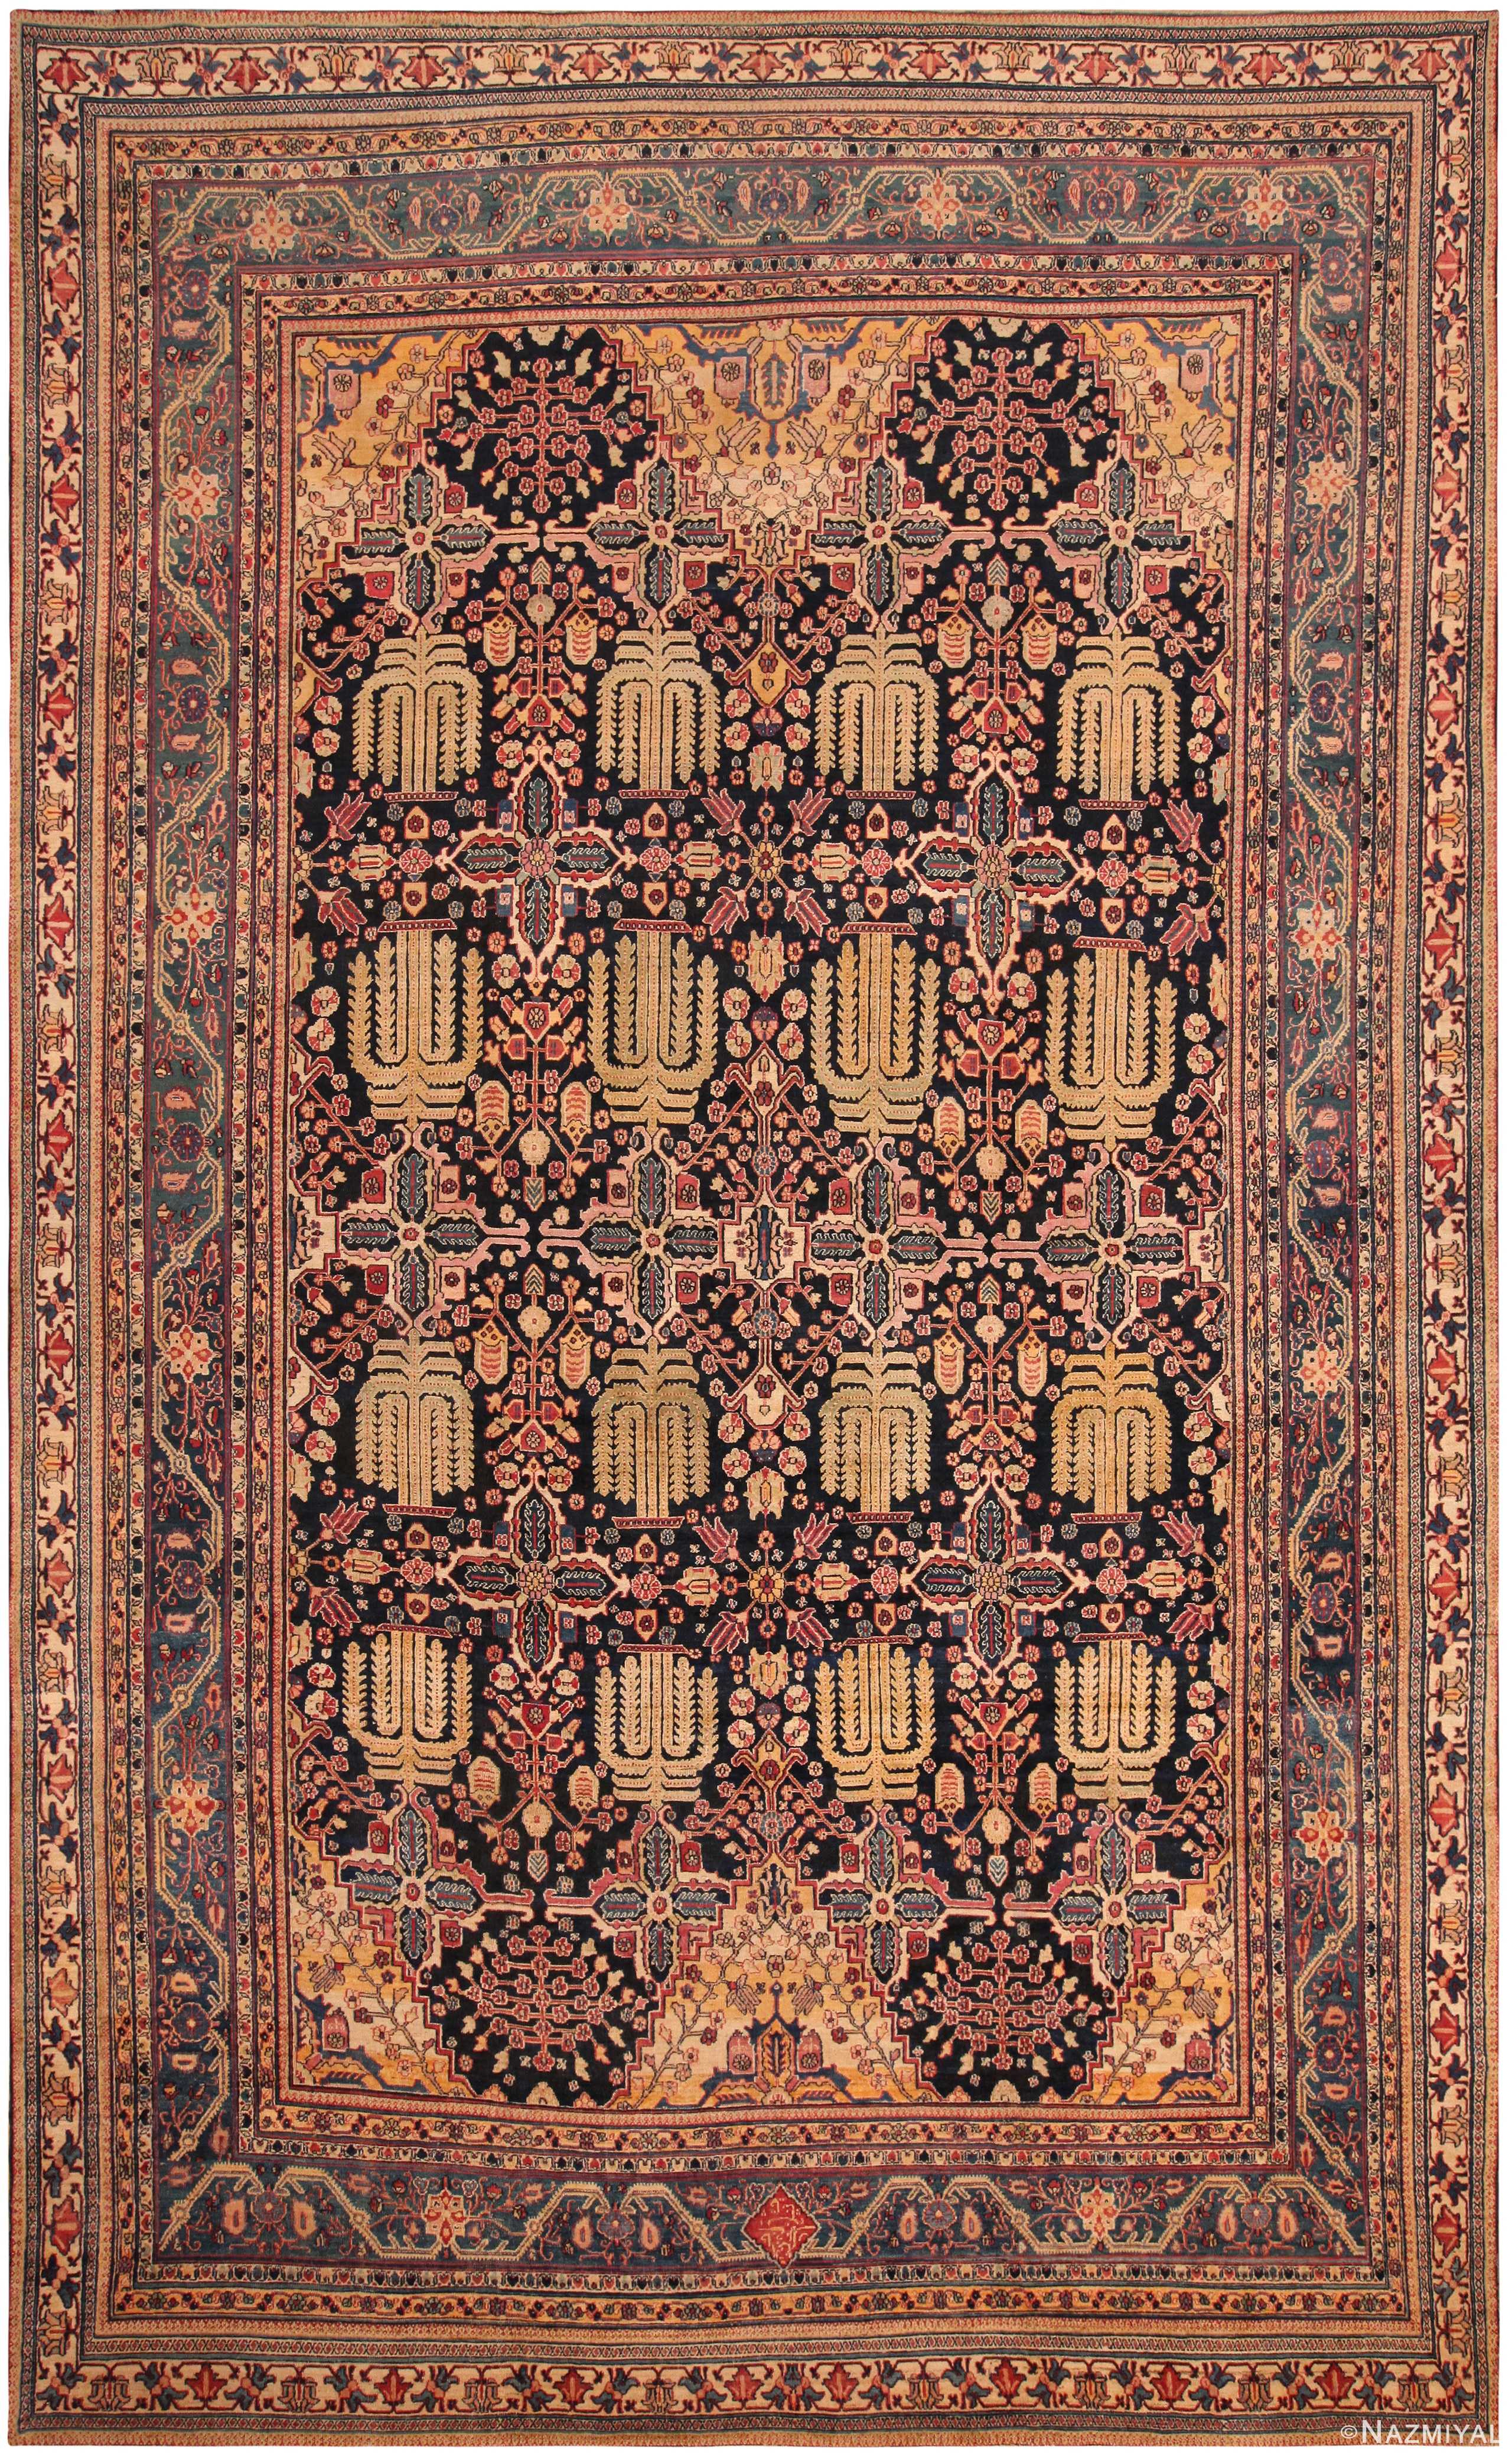 Large Antique Khorassan Doroksh Persian Rug 71505 by Nazmiyal Antique Rugs